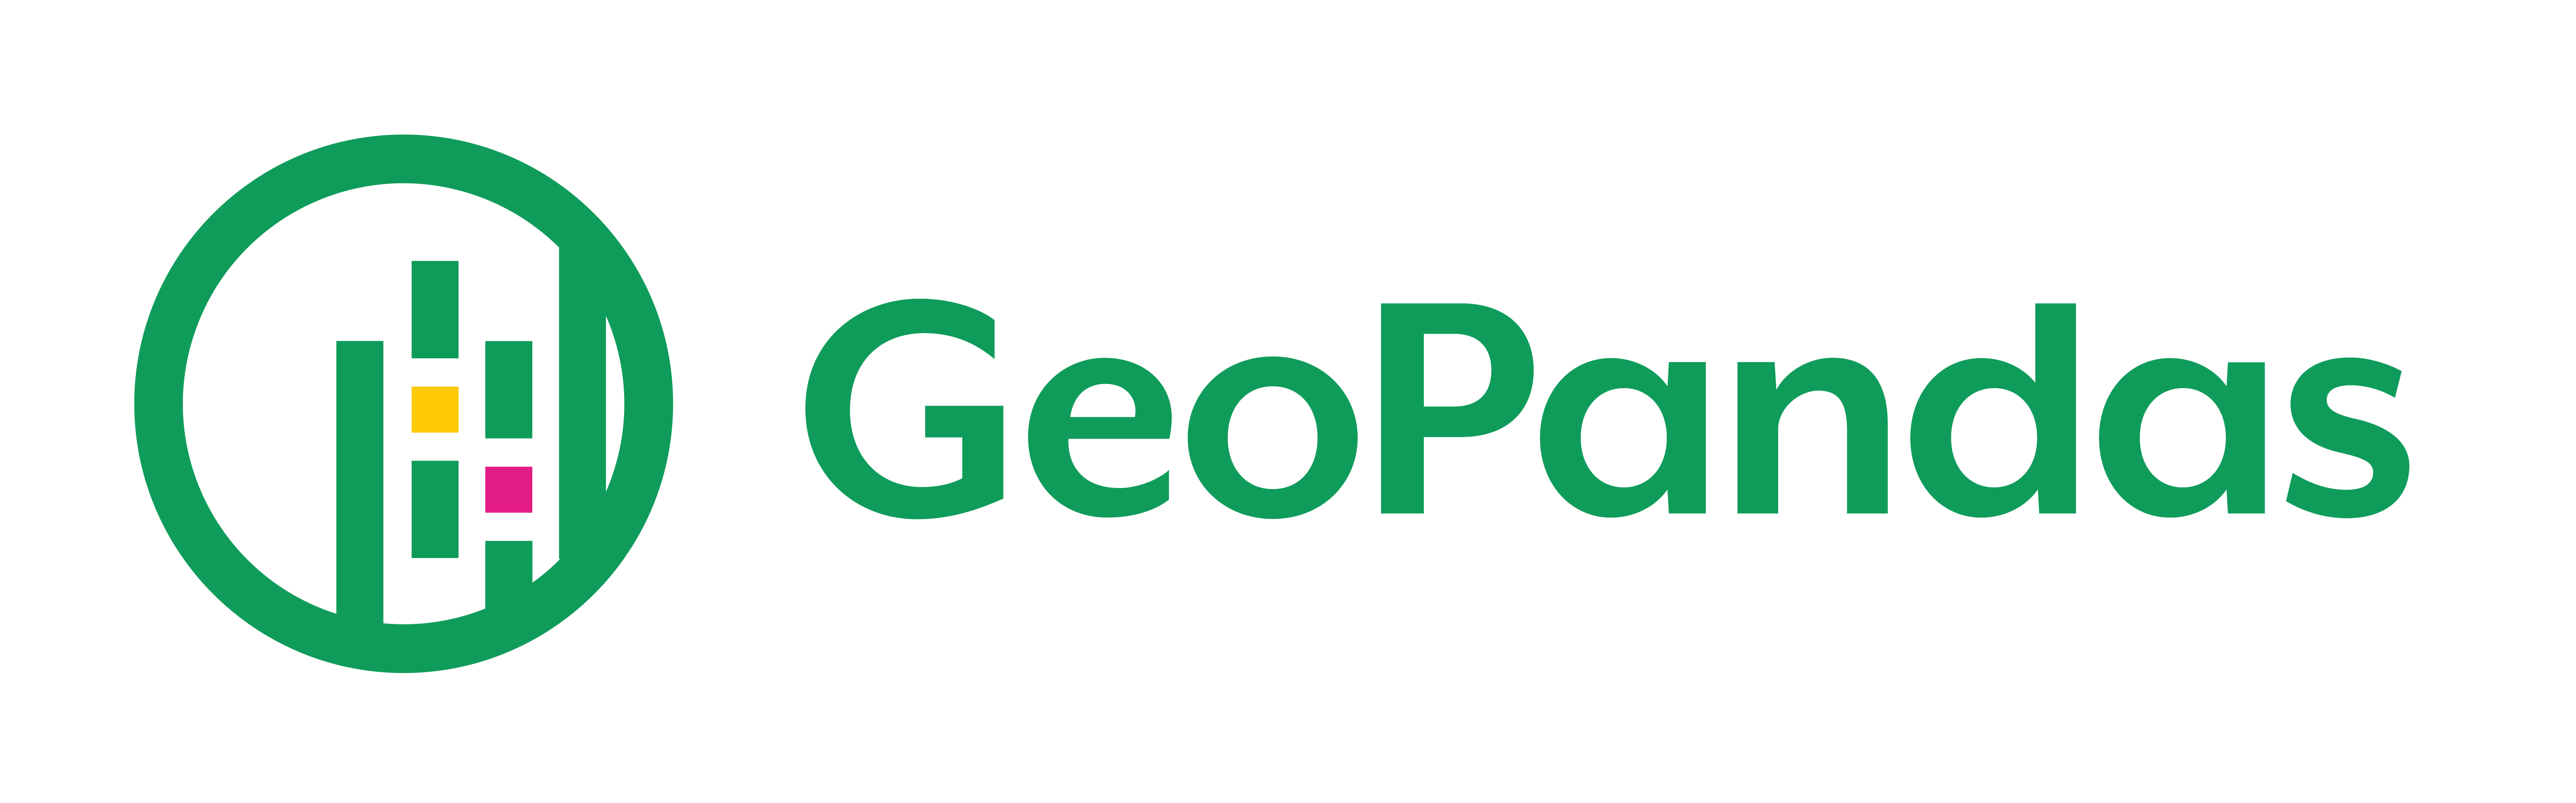 geopandas_logo.png